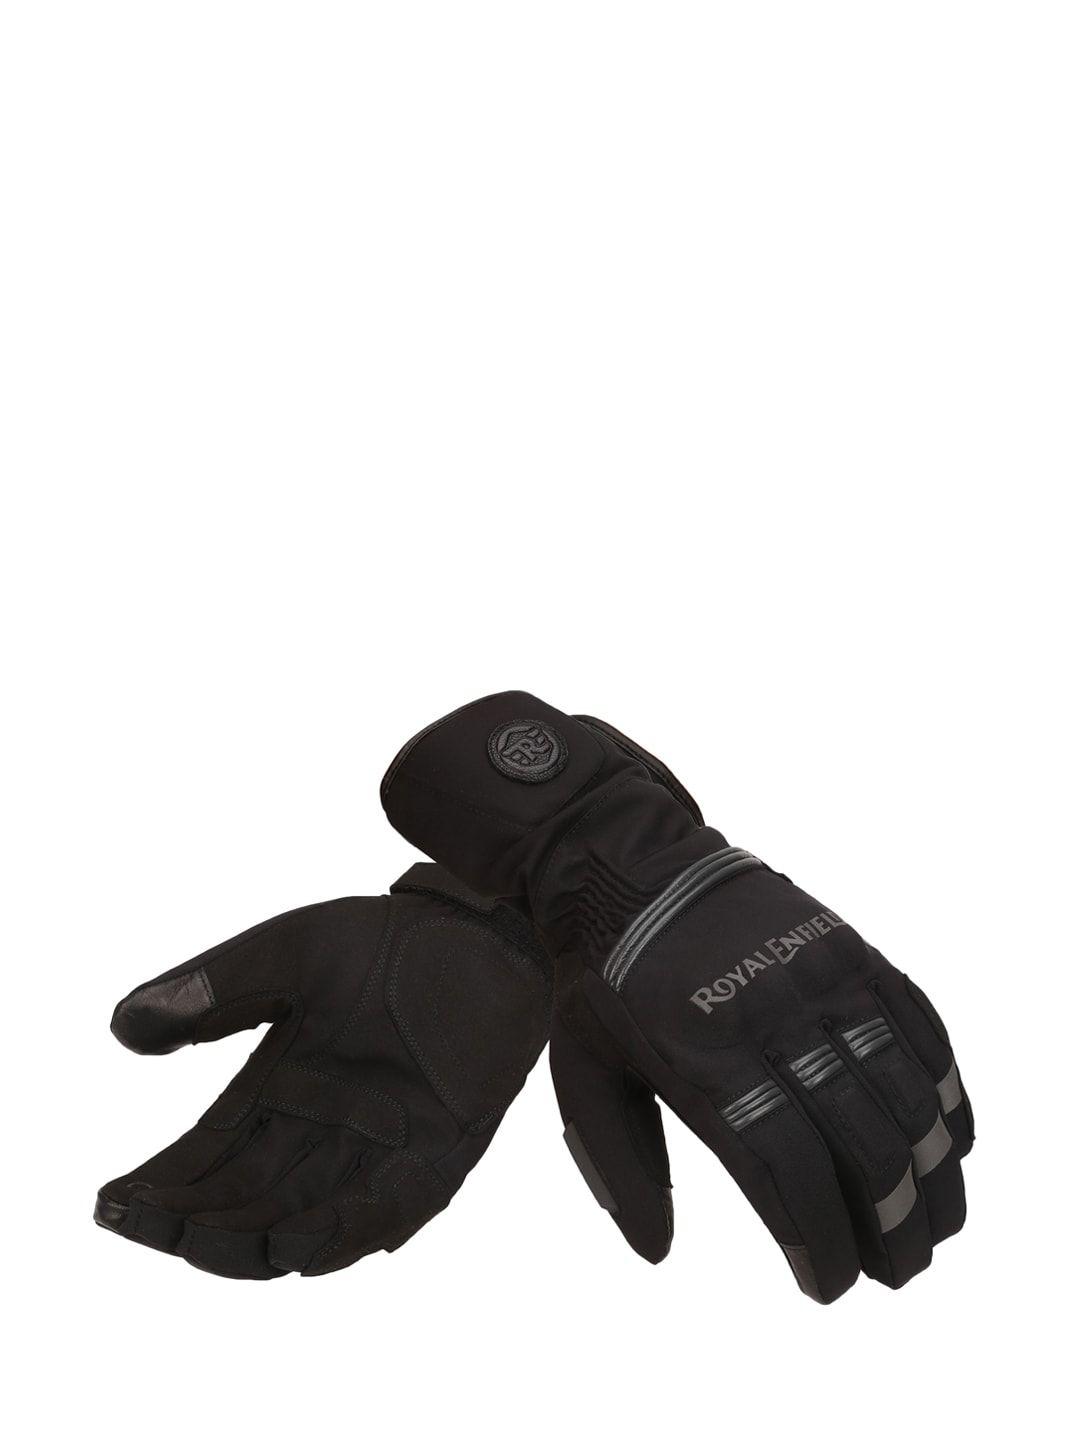 royal enfield men black & grey leather blizzard riding gloves